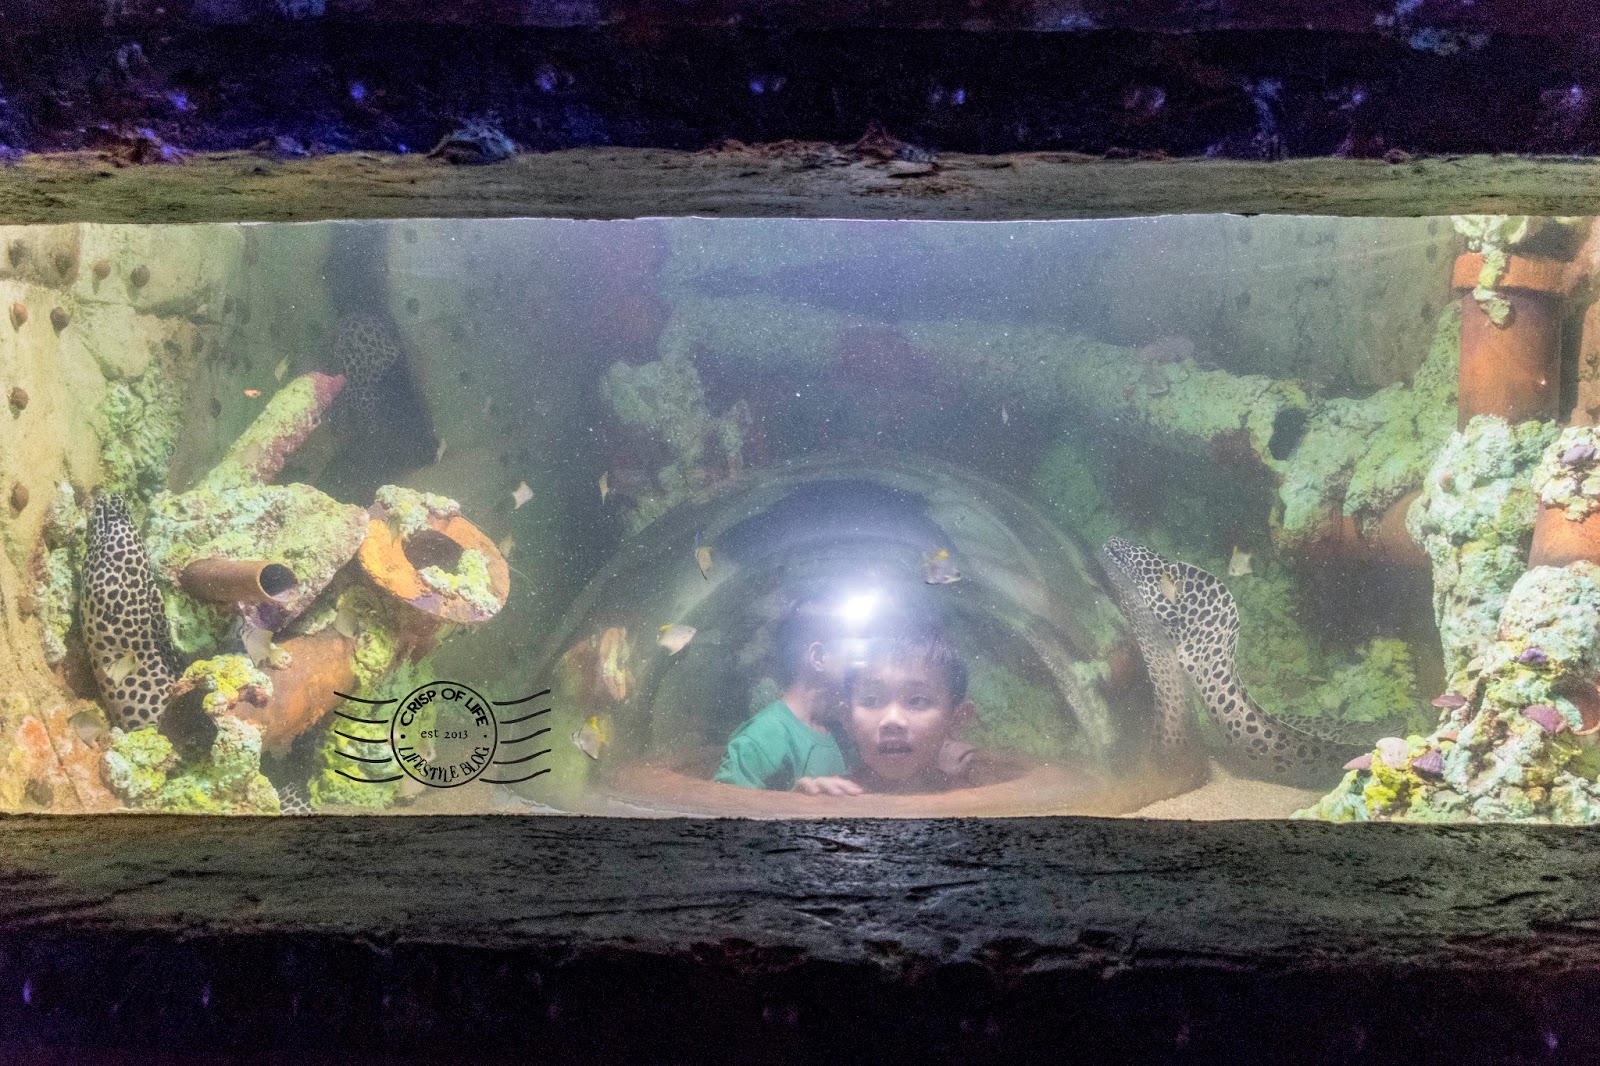 Penang aquarium